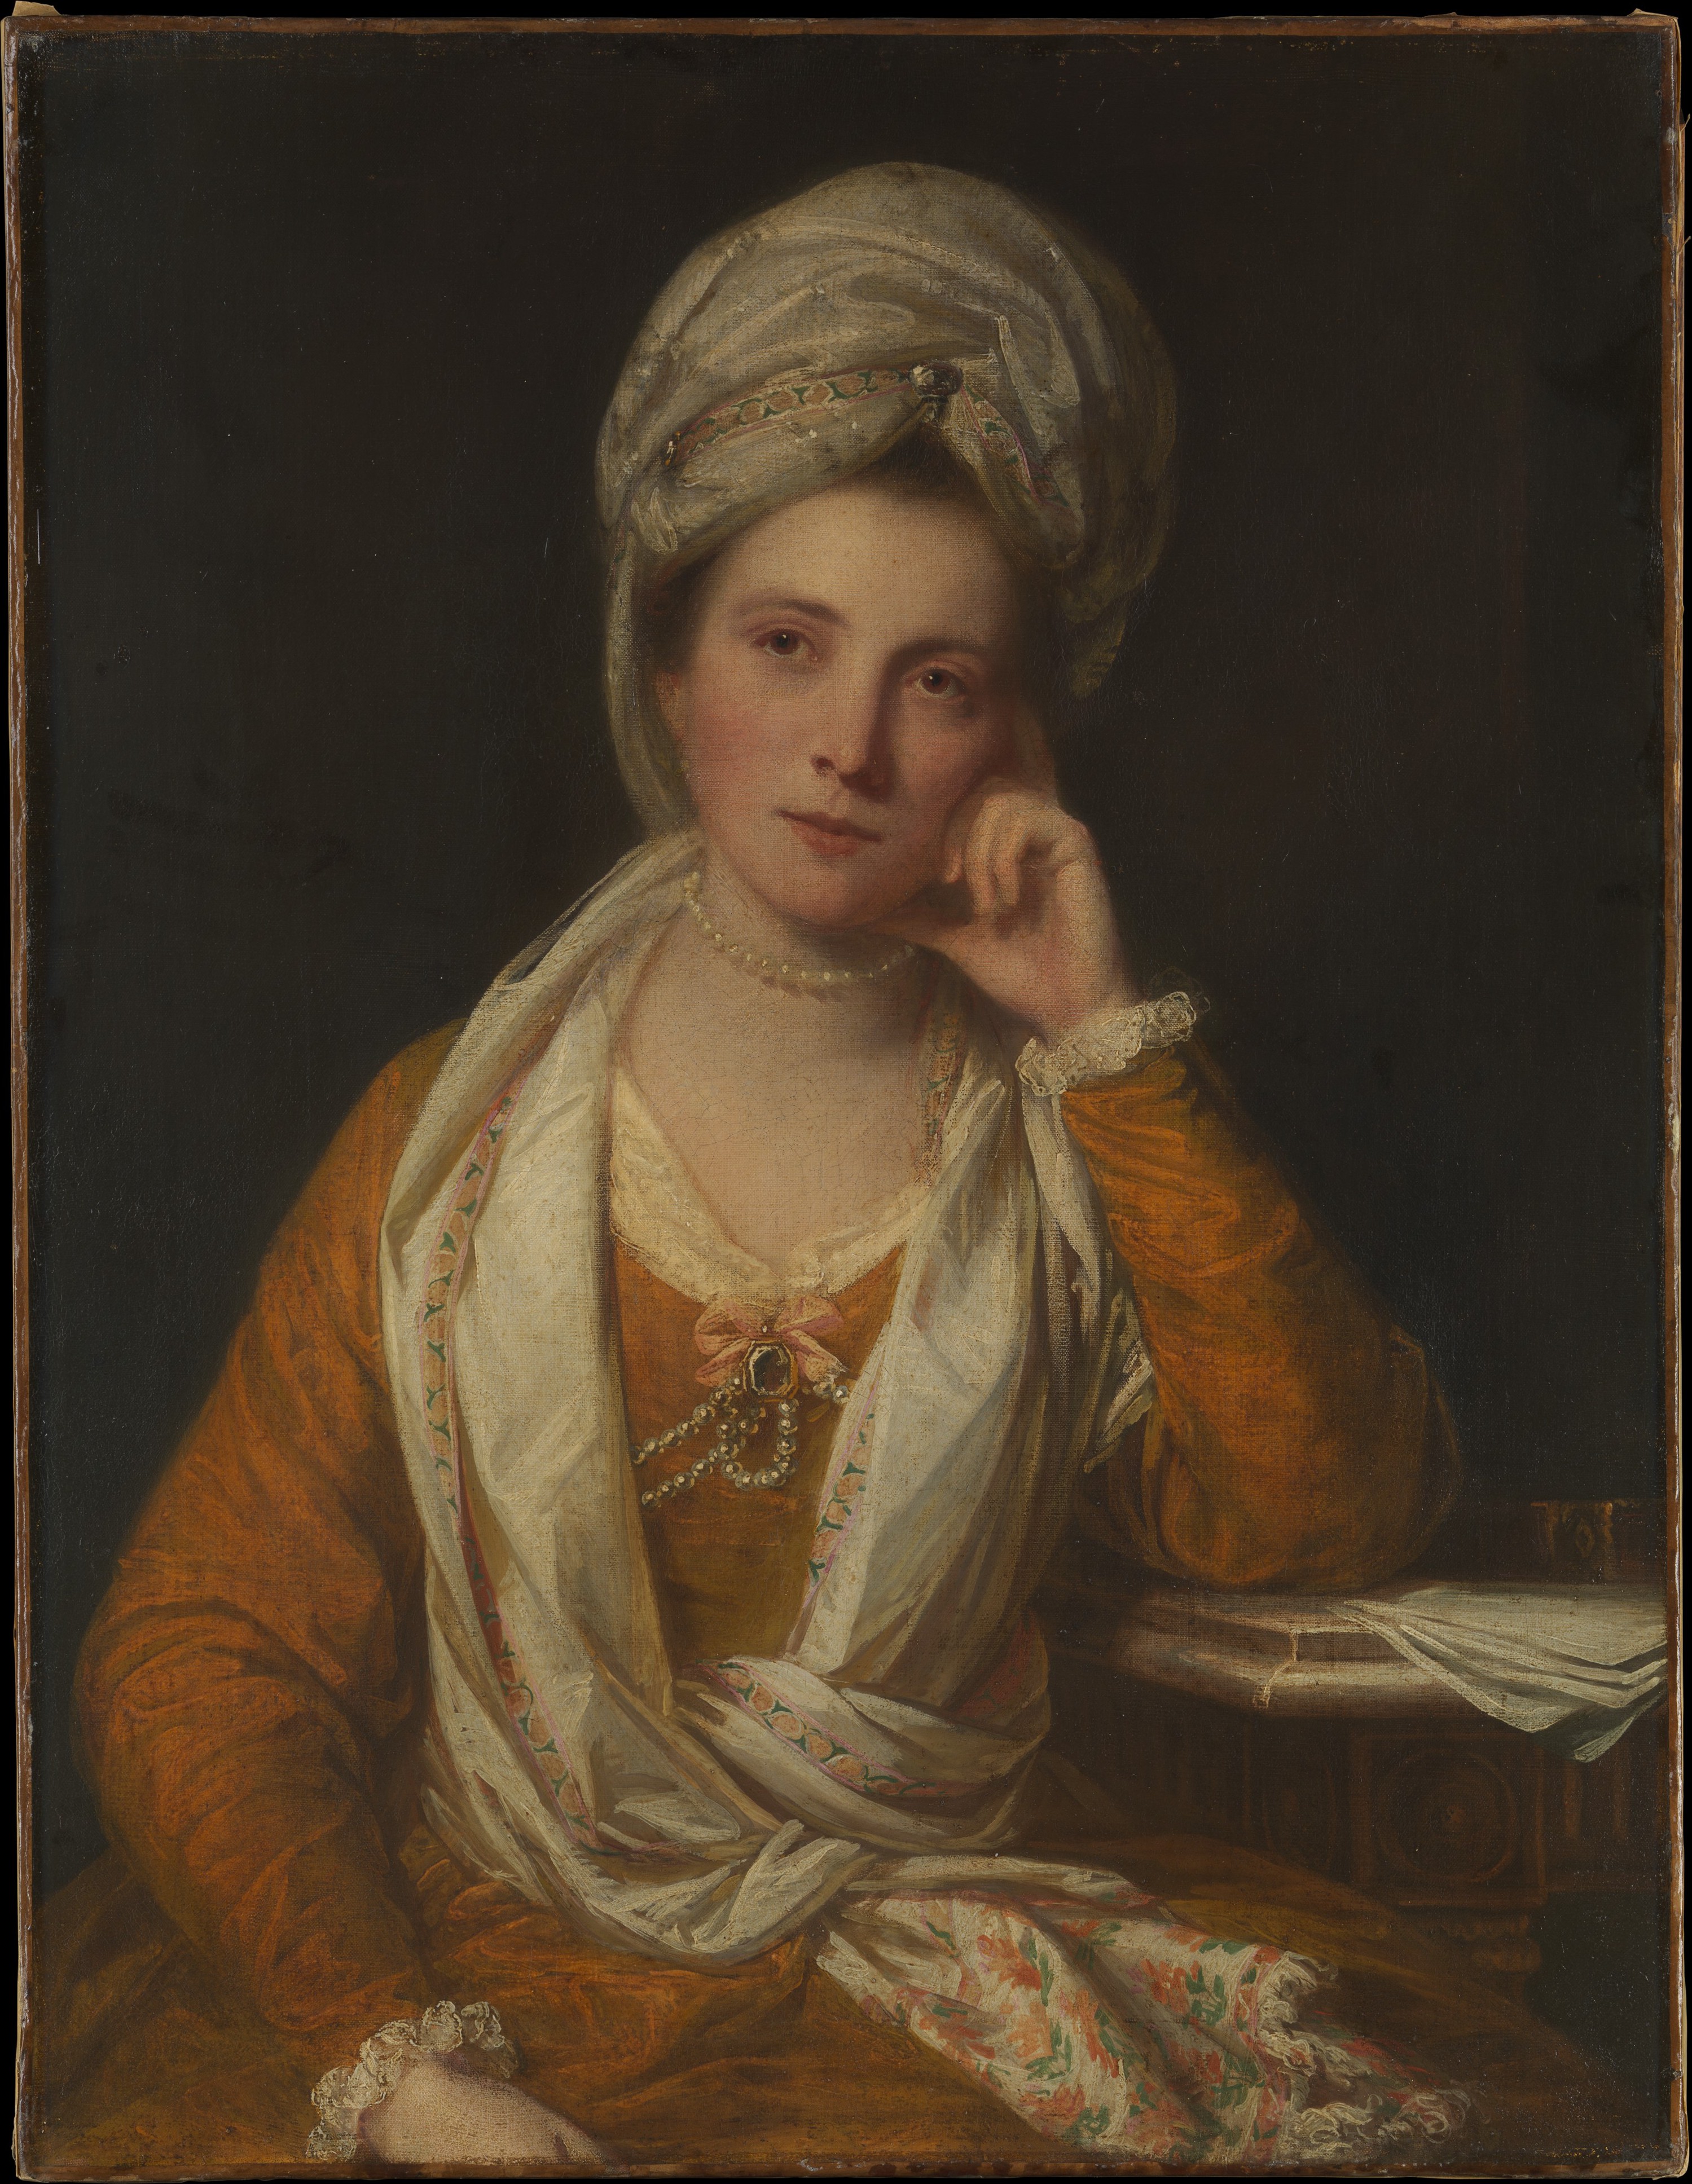 Mrs. Horton, Later Viscountess Maynard by Joshua Reynolds - 1770s - 92.1 x 71.1 cm Metropolitan Museum of Art